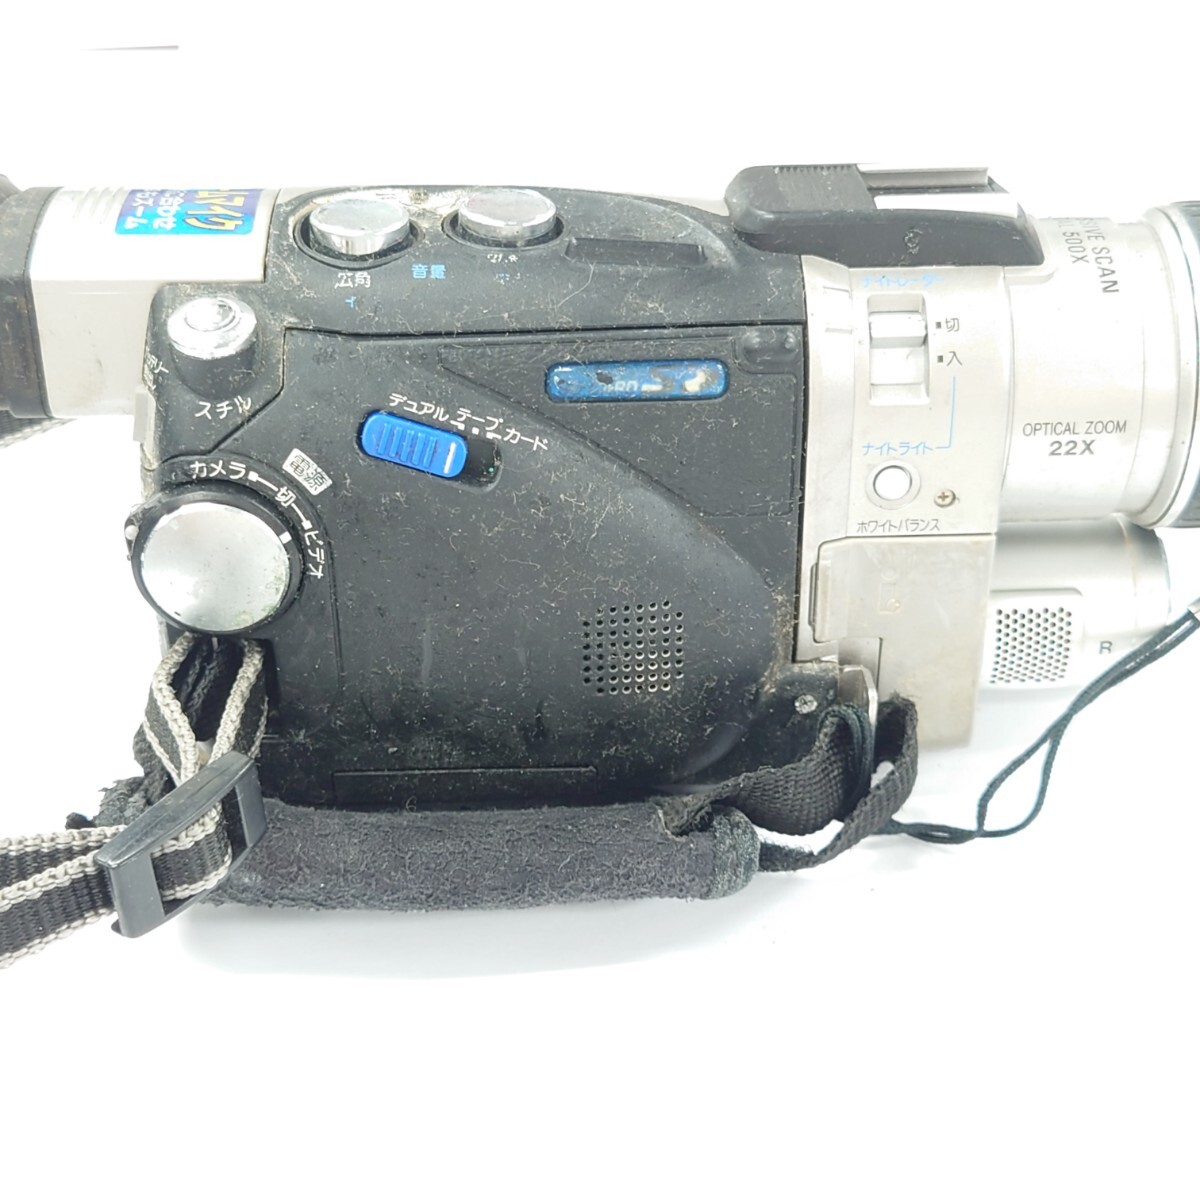 I954 カメラ まとめ SHARP VL-MR1 MINOLTA 7000 Canon EOS 55 ZOOM LENS EF 28-105mm 1:3.5-4.5 デジカメ 中古 ジャンク品 訳あり